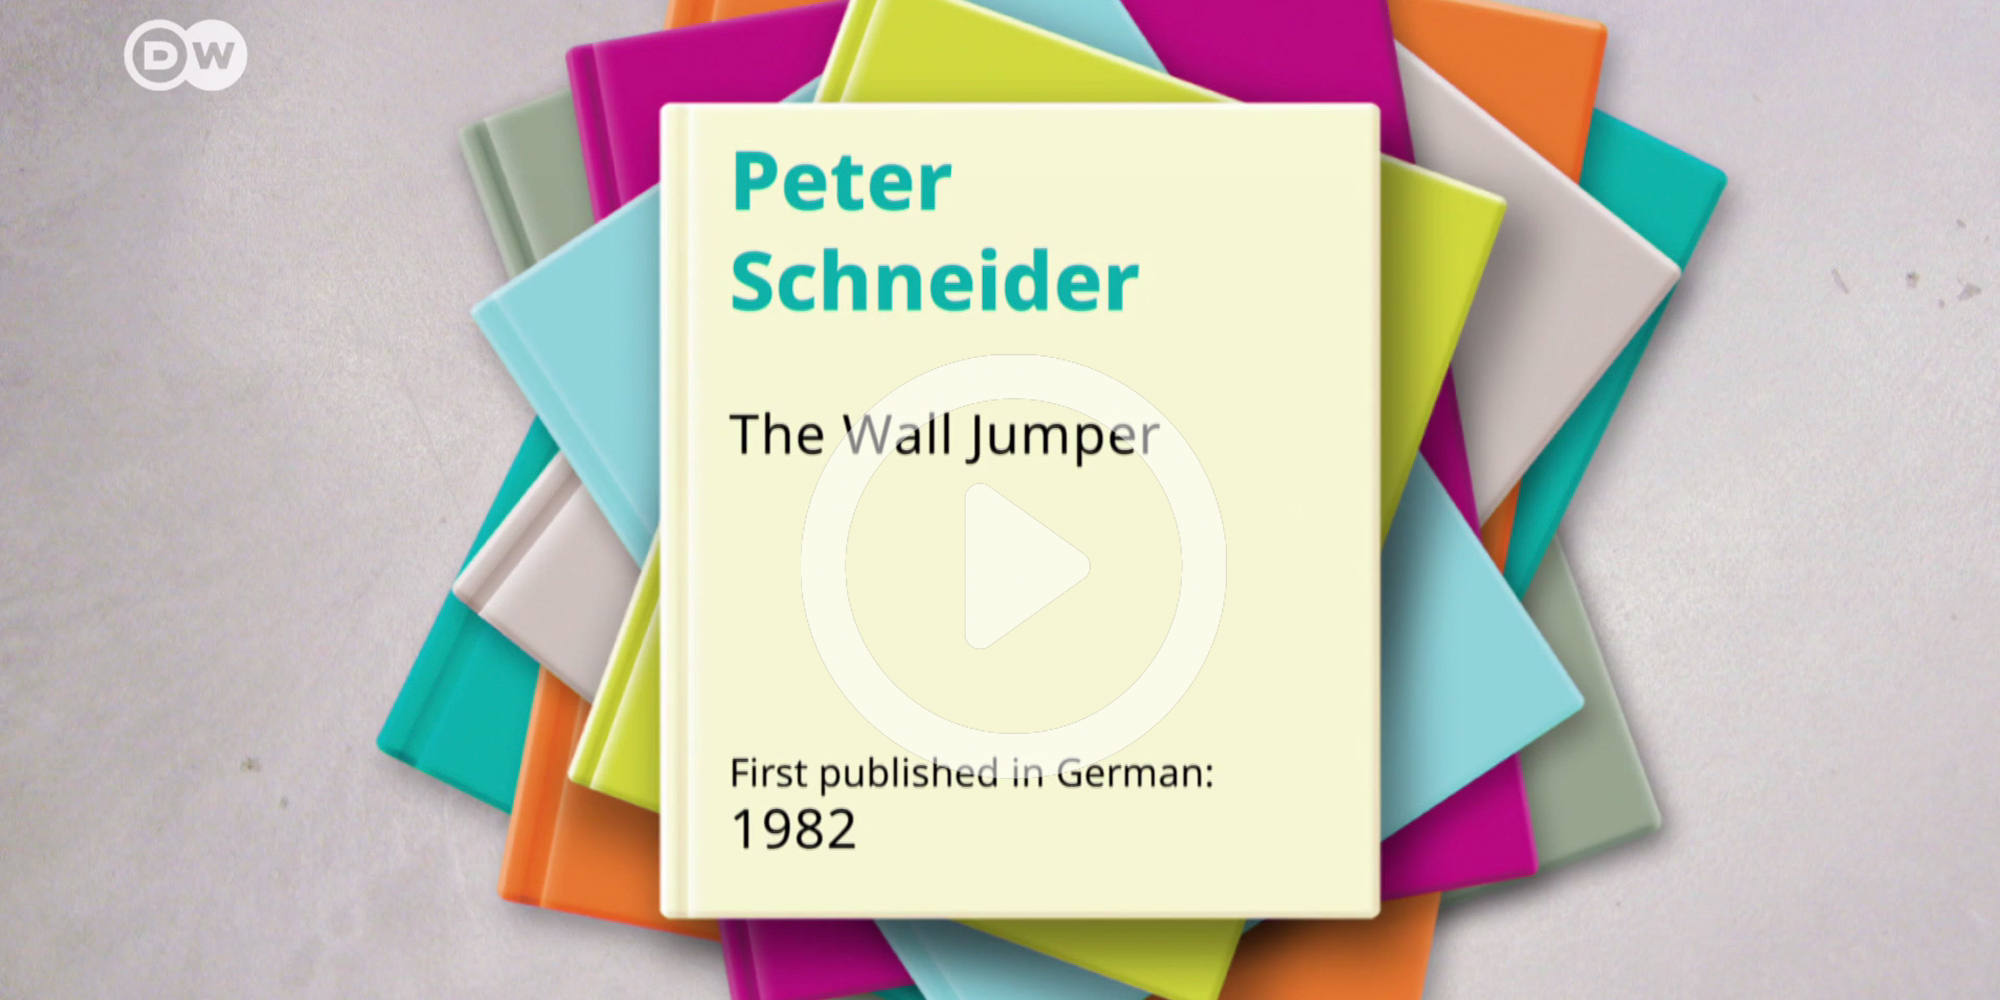 https://www.deutschland.de/sites/default/files/media/image/german-books-reading-authors-literature-peter-schneider_0.jpg